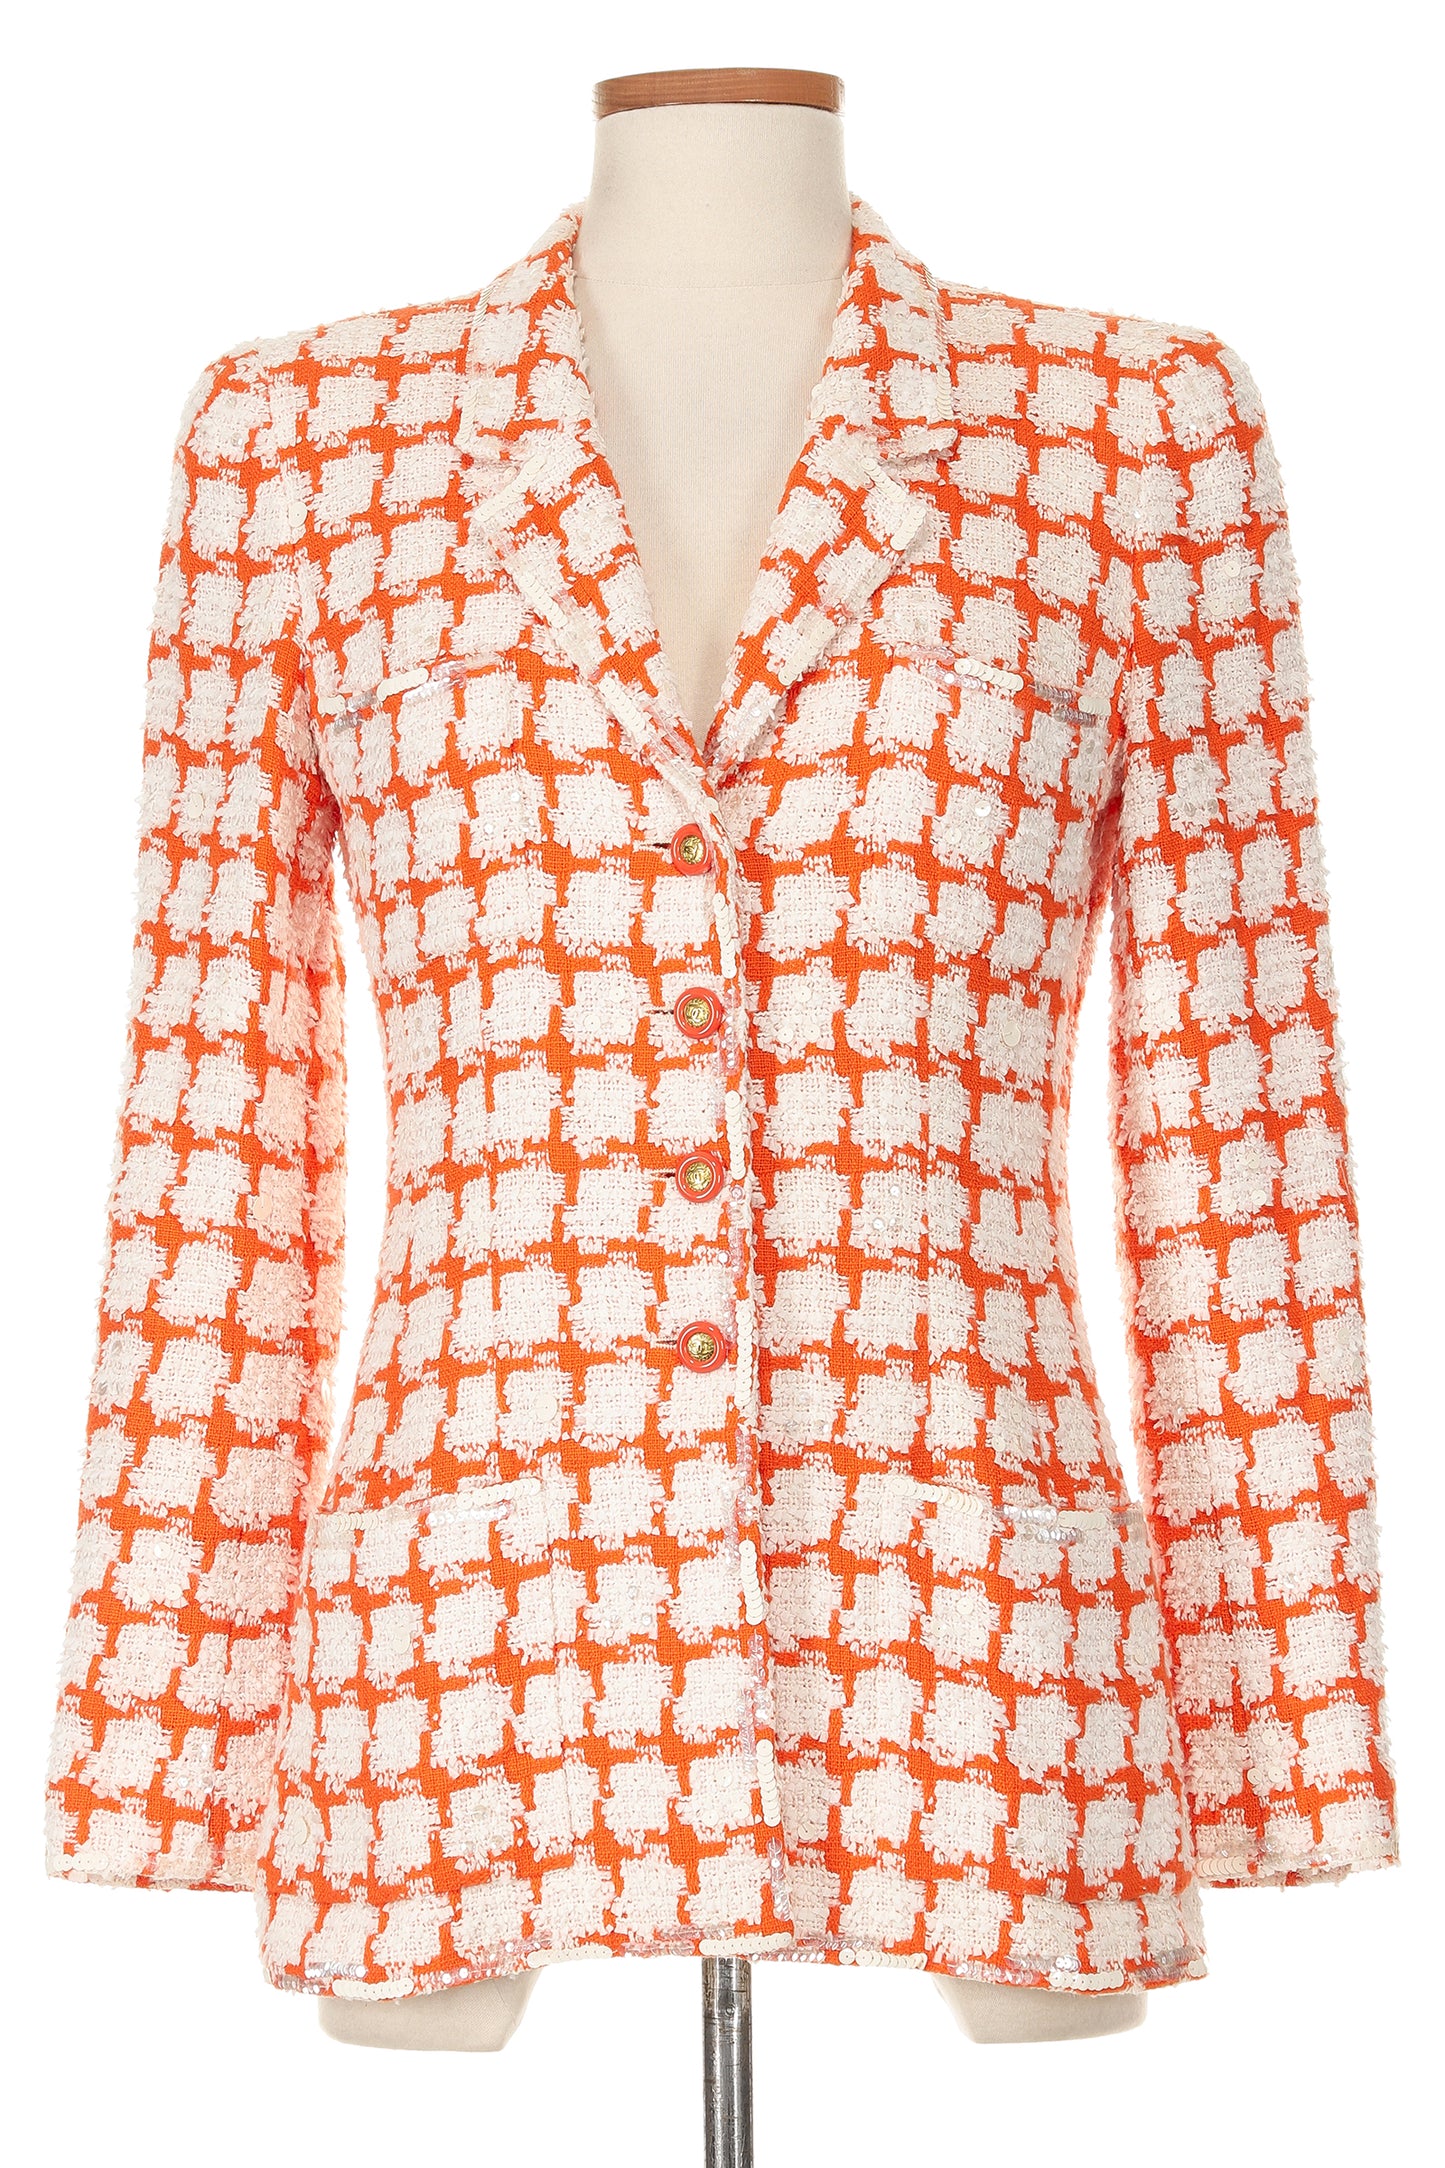 Chanel Spring 1995 Orange and White Sequined Tweed Jacket (Runway)